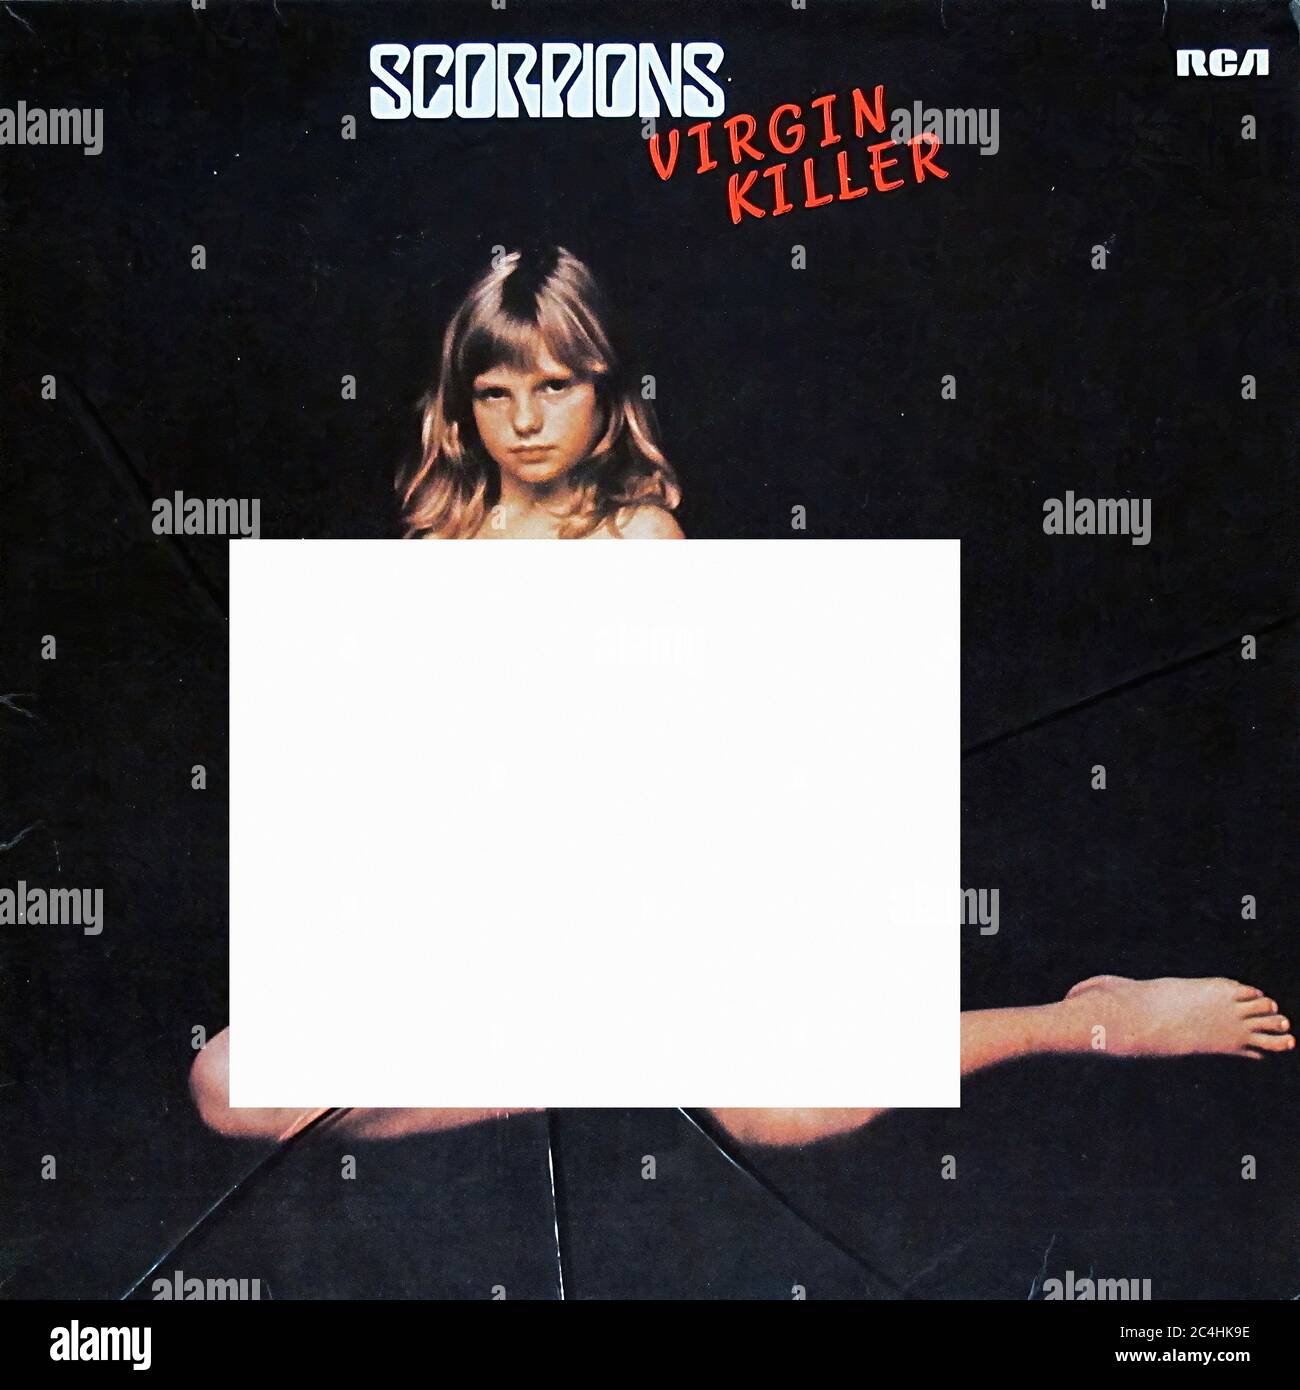 Scorpions Virgin Killer Uncensored First German Pressing 12'' Lp Vinyl - Vintage Record Cover 01 Stock Photo